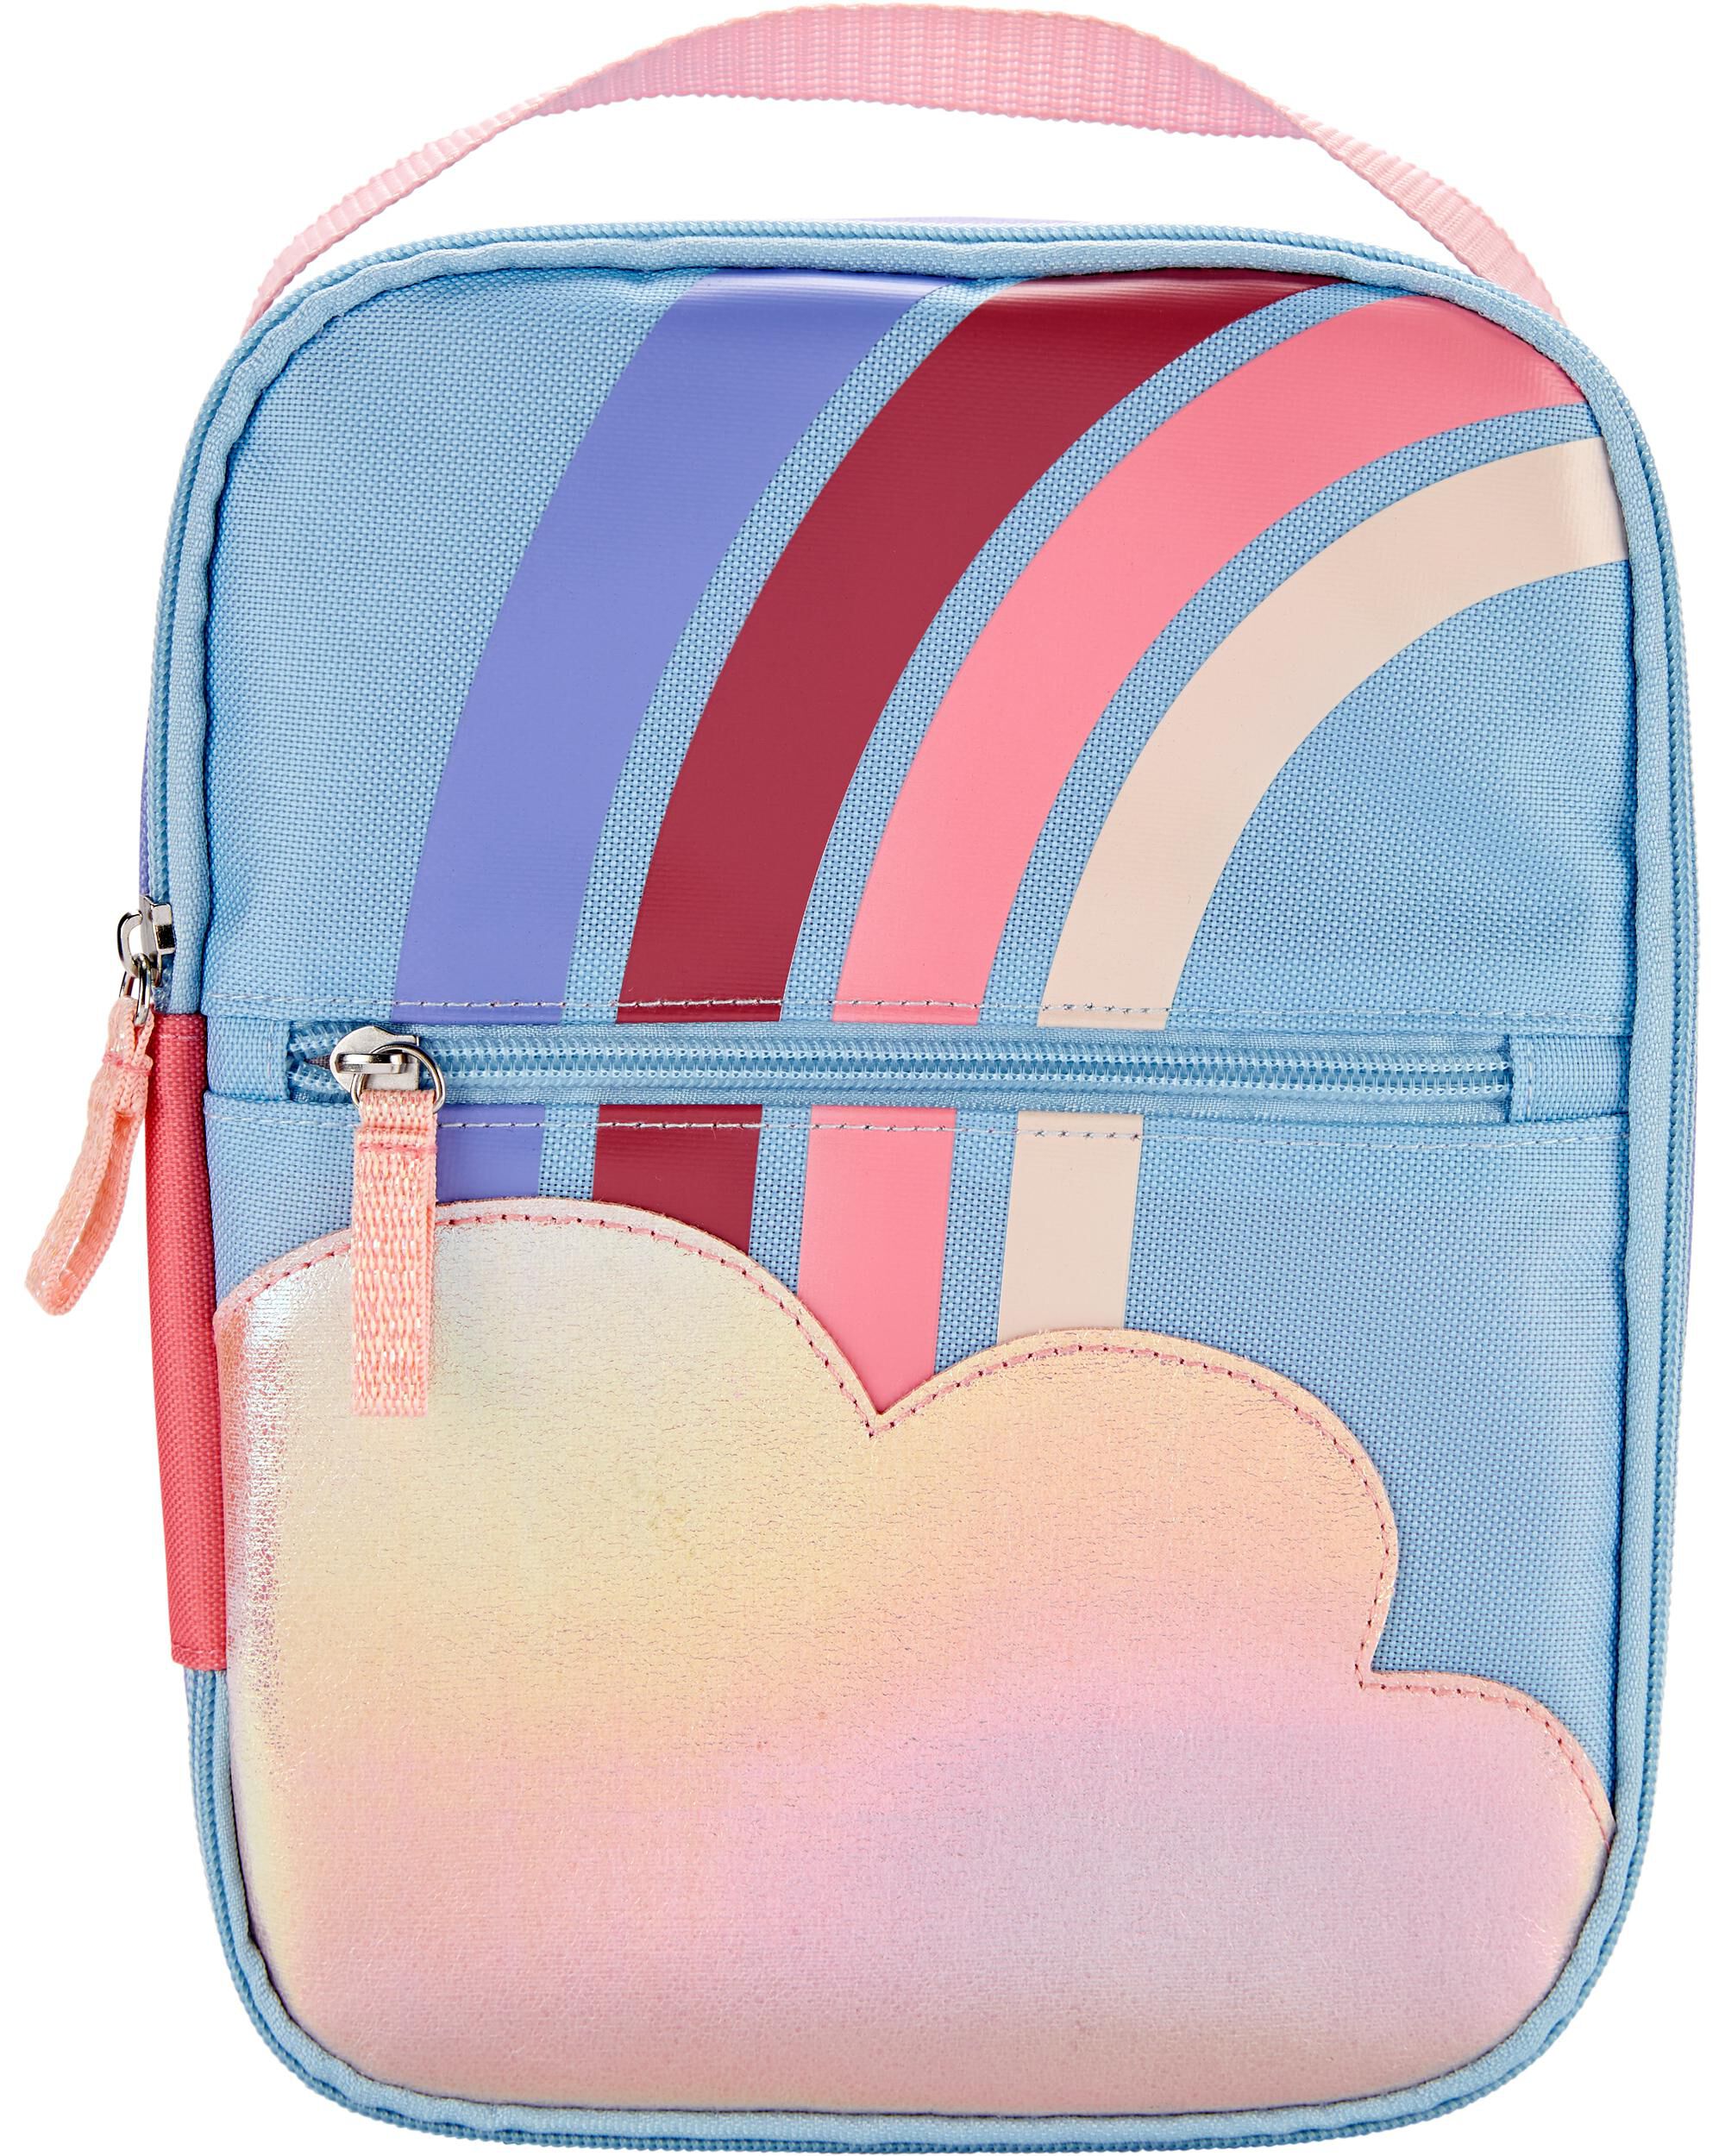 rainbow lunch bag